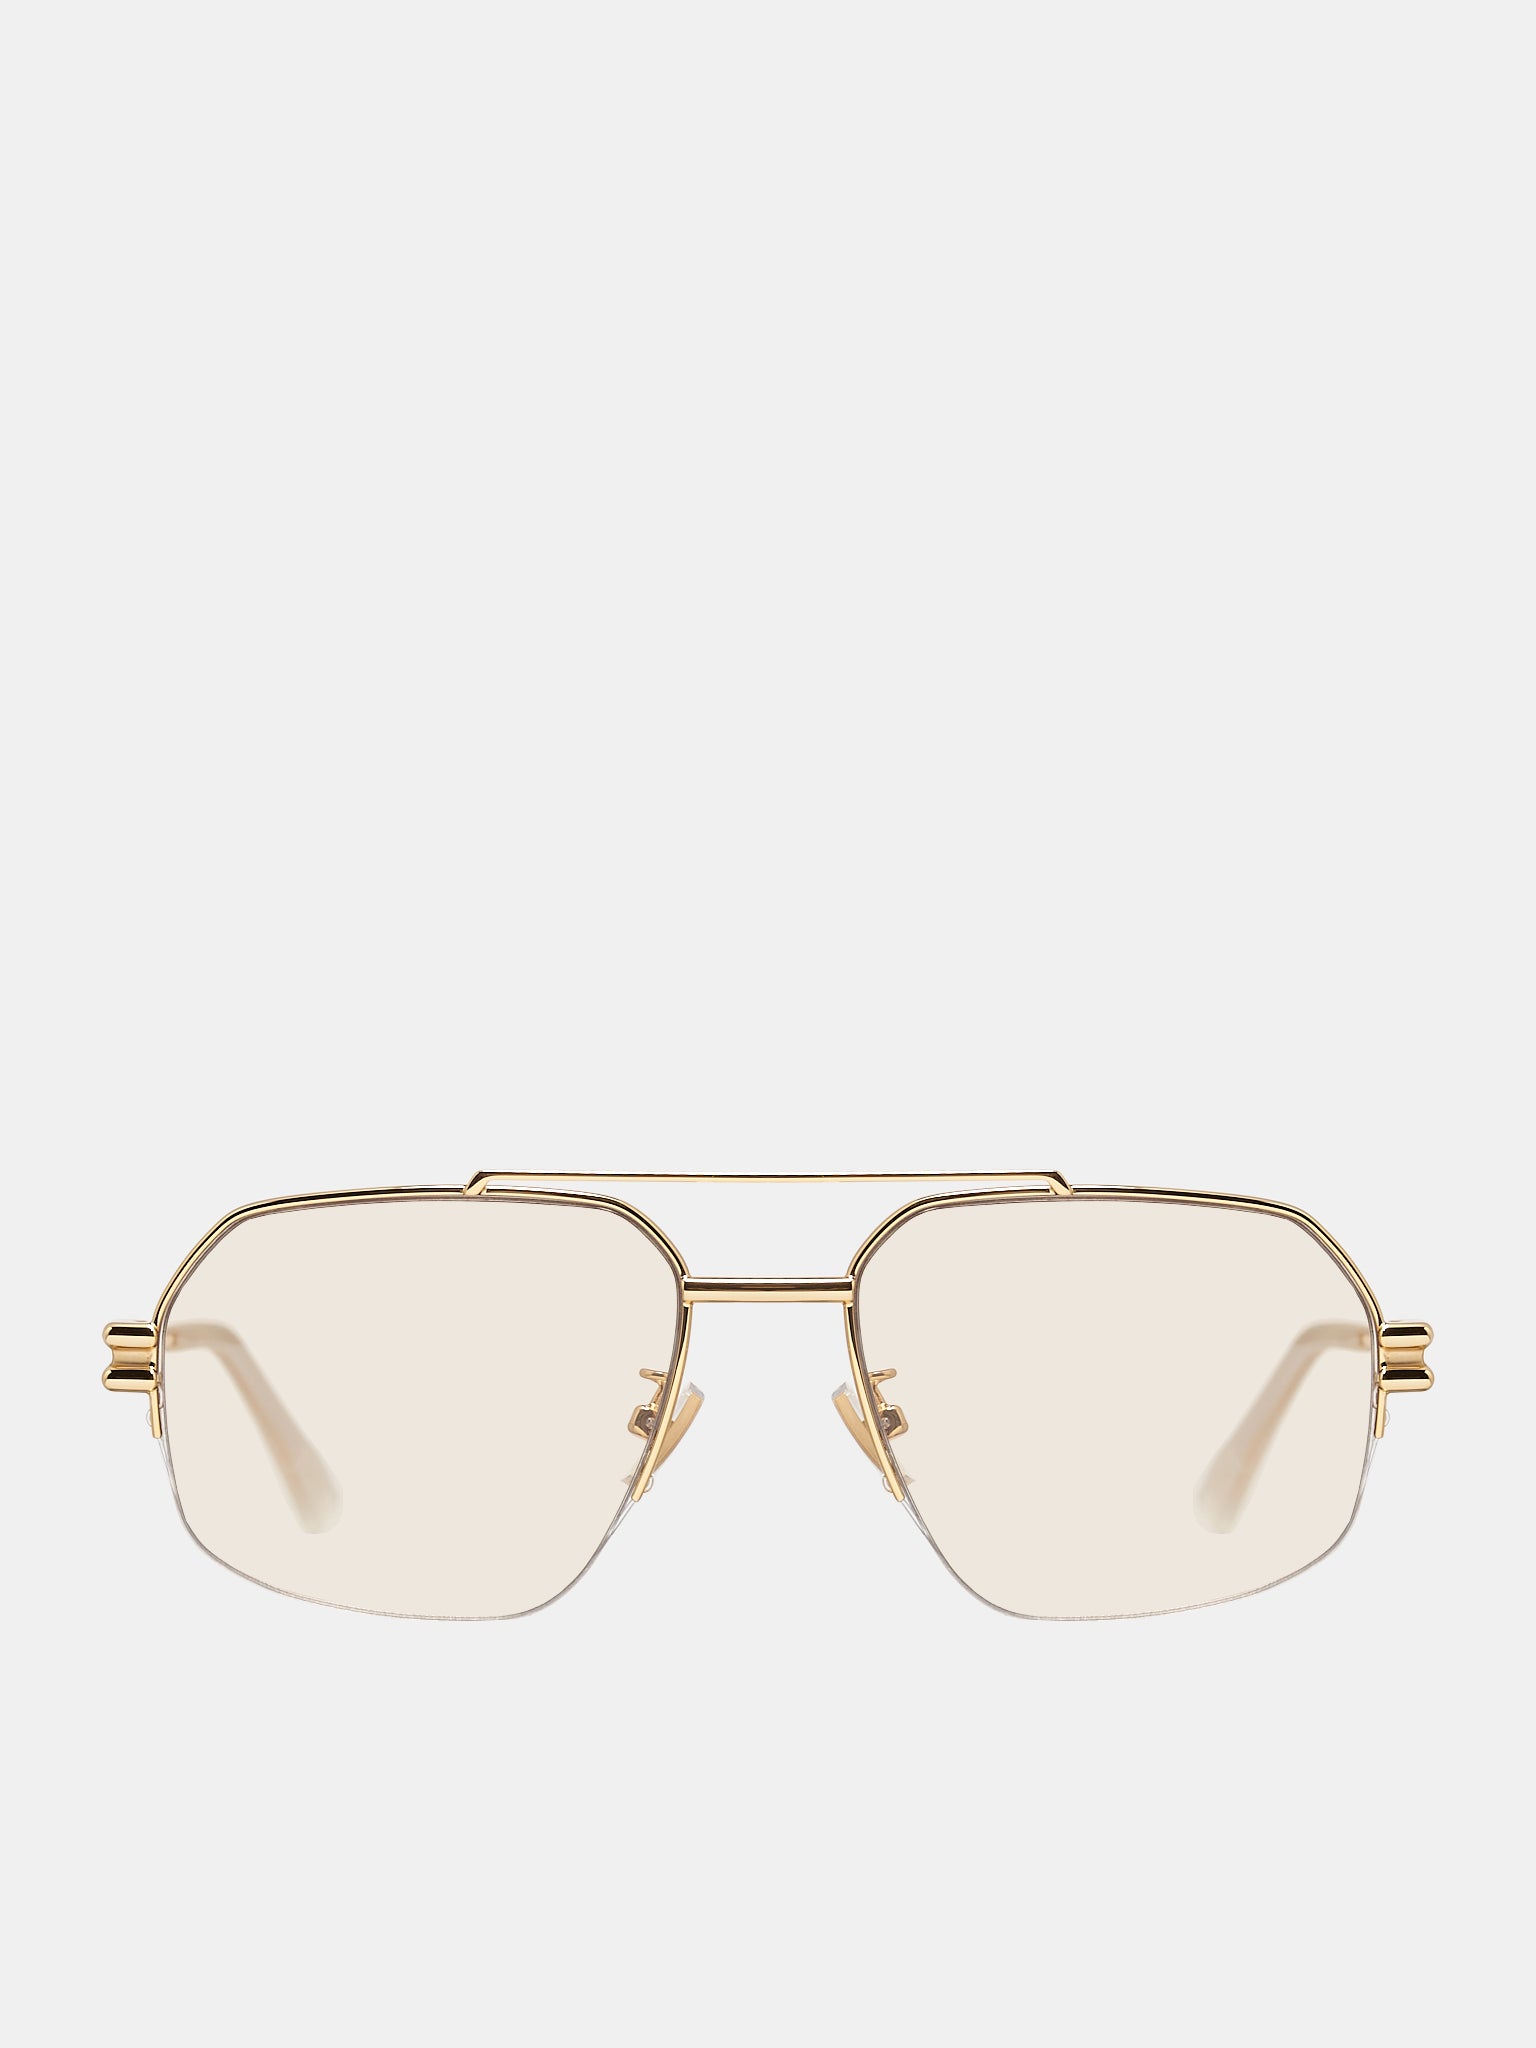 Classic Aviator Sunglasses in Gold - Bottega Veneta